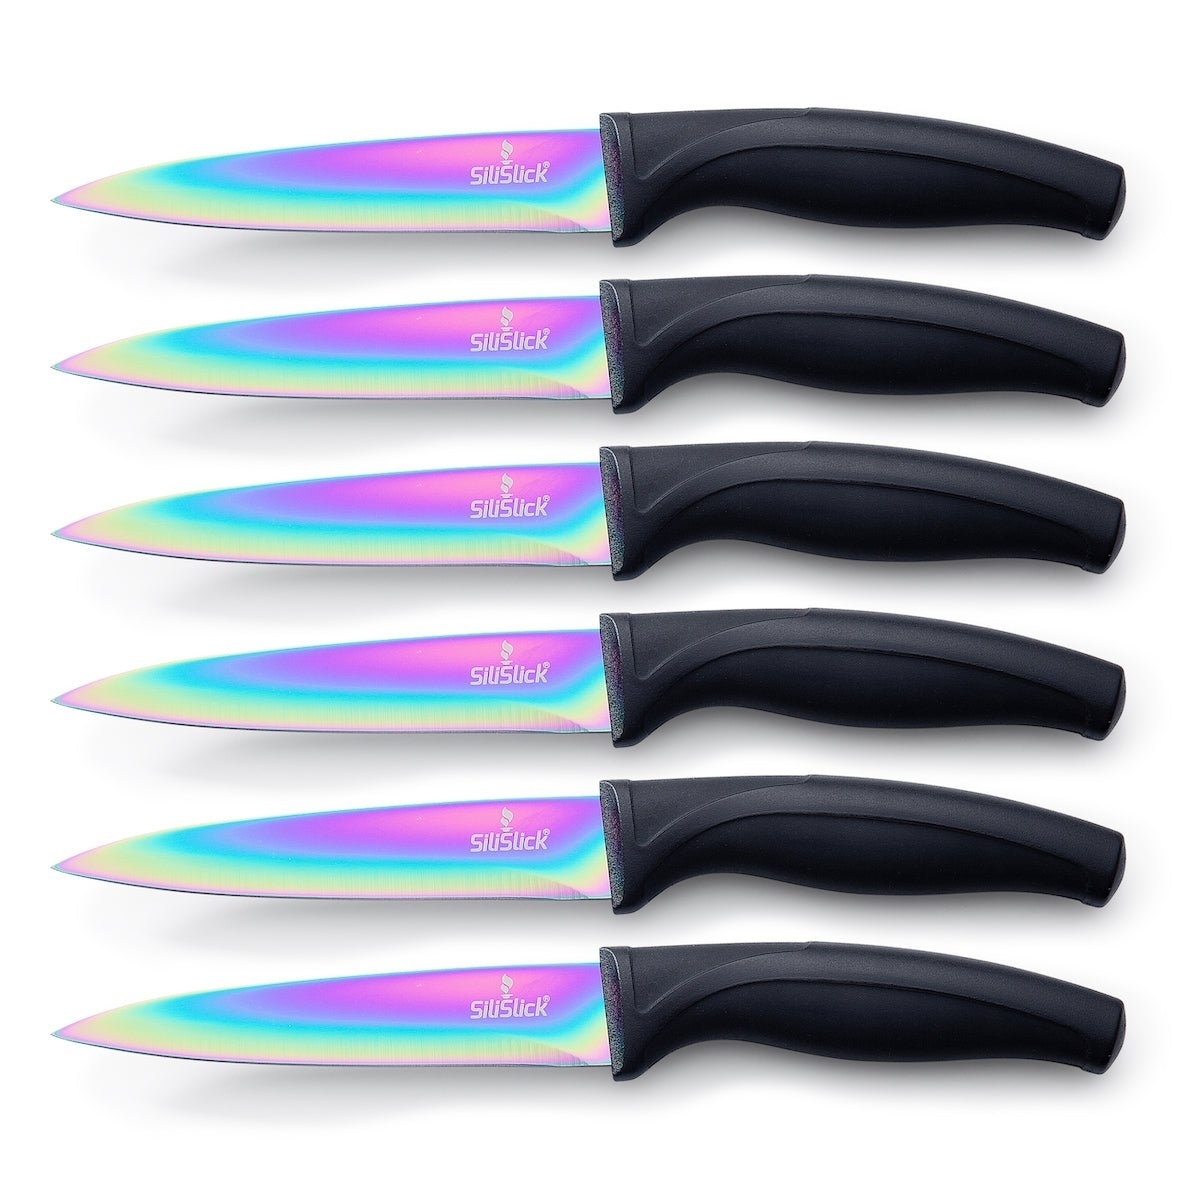 SiliSlick Stainless Steel Steak Knife Set Of 6 - Rainbow Iridescent Black Handle - Titanium Coated With Straight Edge For Cutting Meat